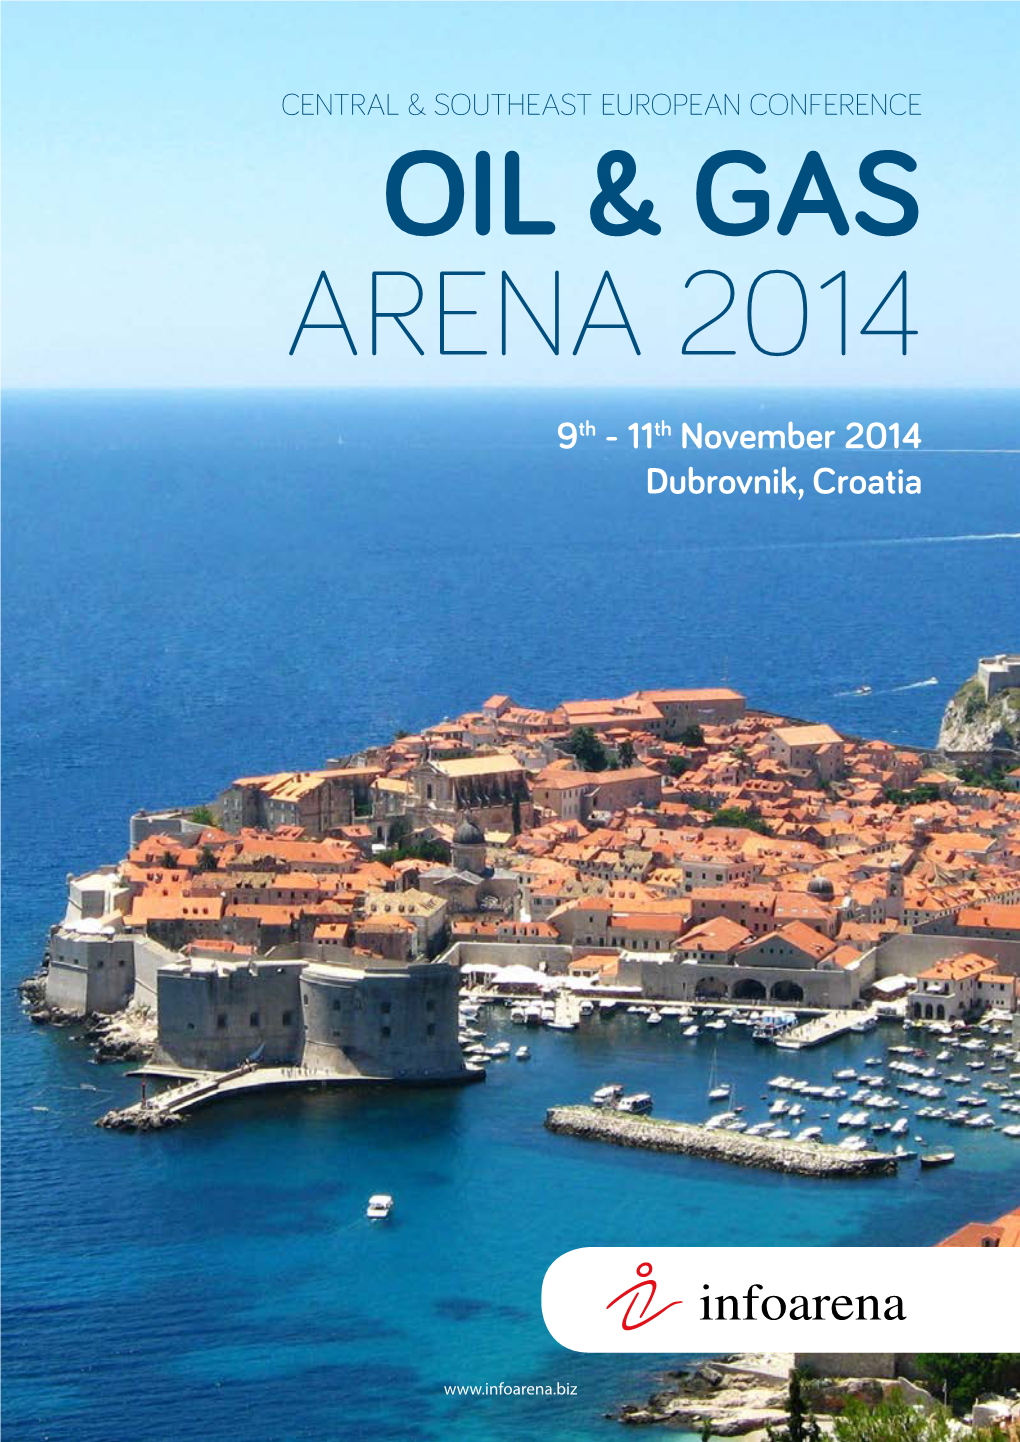 9Th - 11Th November 2014 Dubrovnik, Croatia